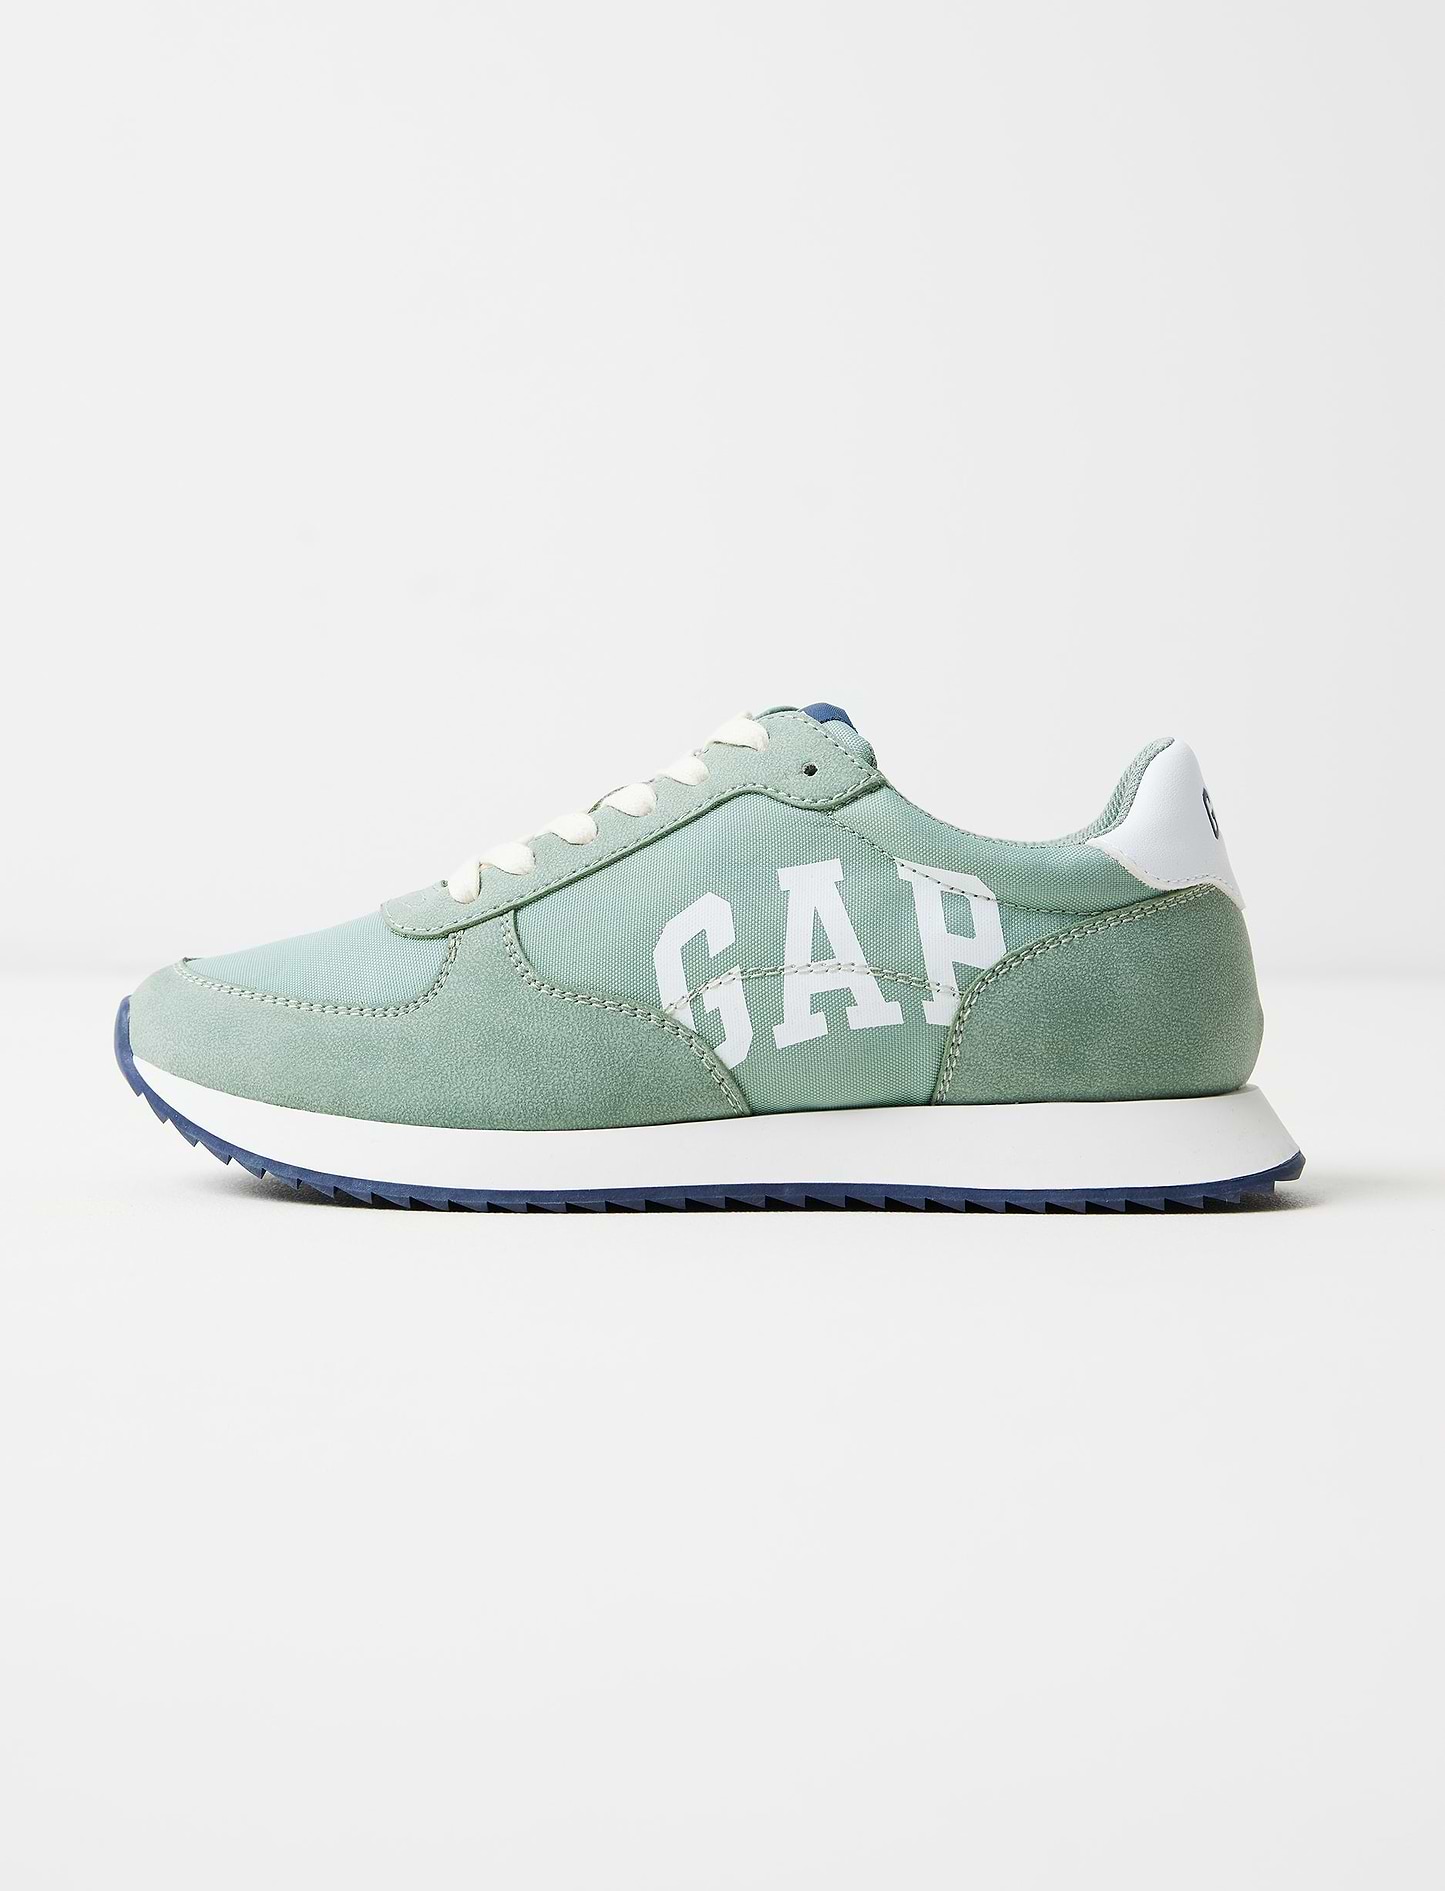 Gap Nashville - נעלי סניקרס גאפ לילדים בצבע מרווה